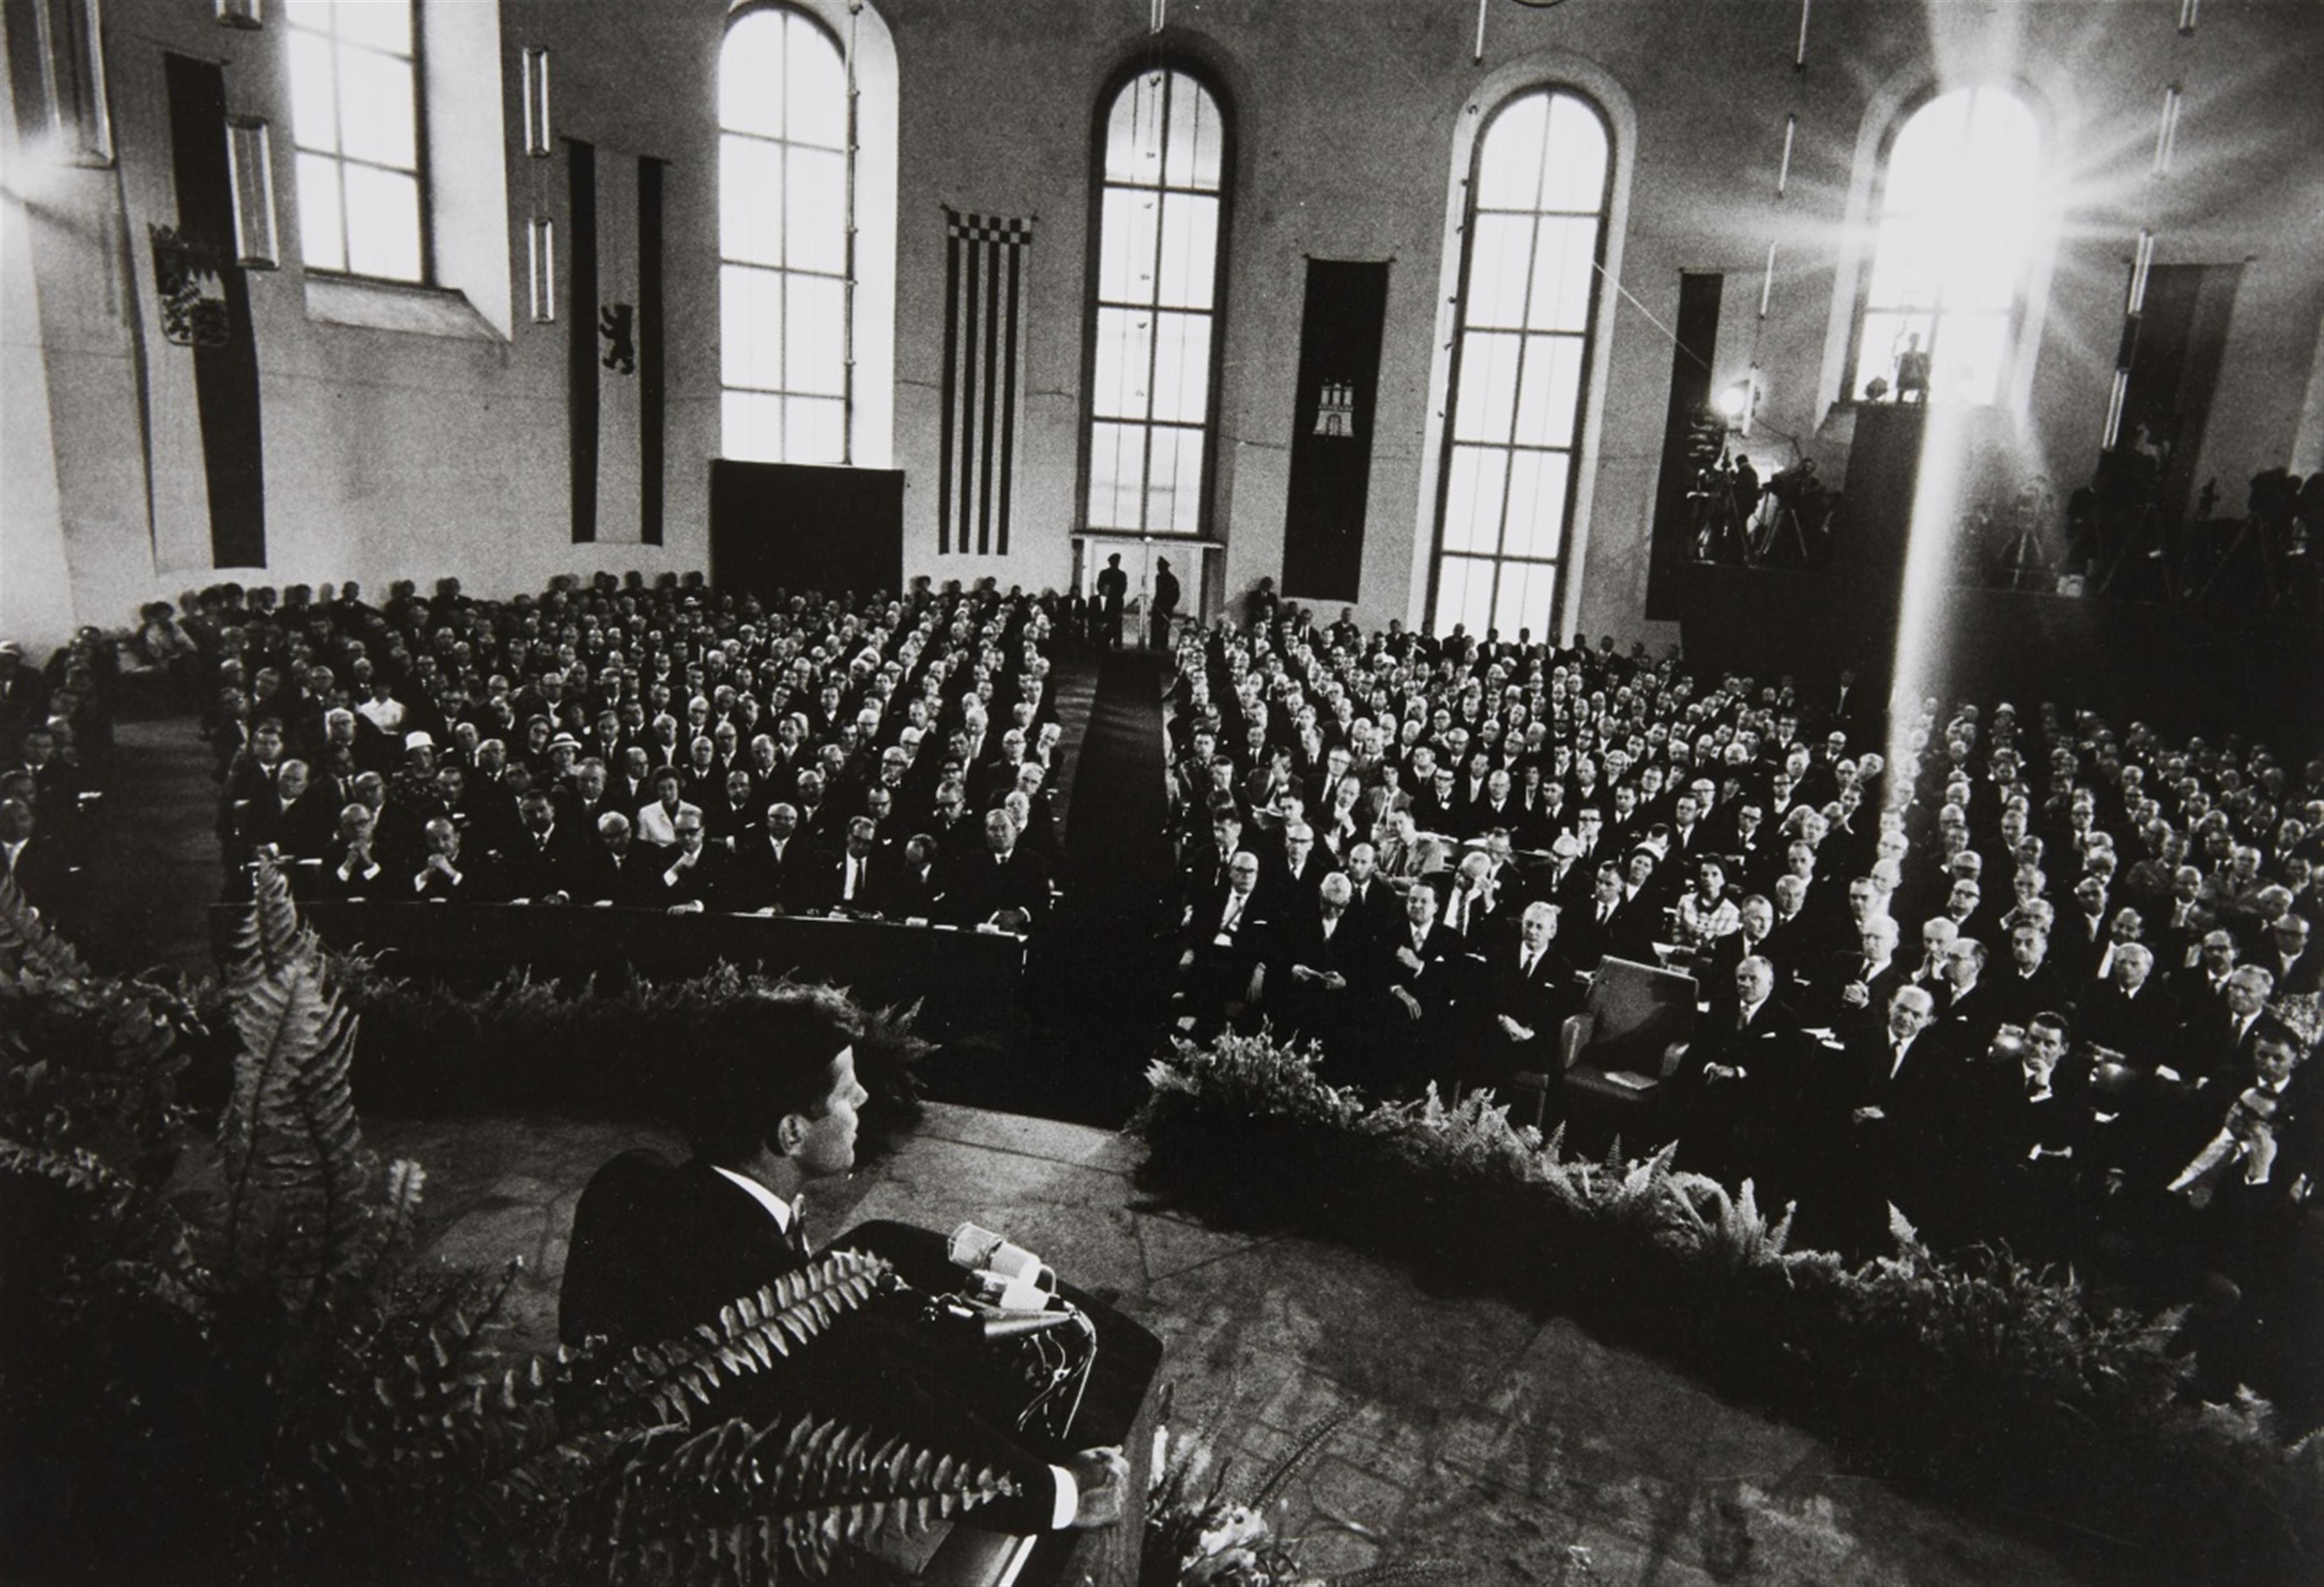 Will McBride - John F. Kennedy in der Paulskirche, Frankfurt/Main - image-1